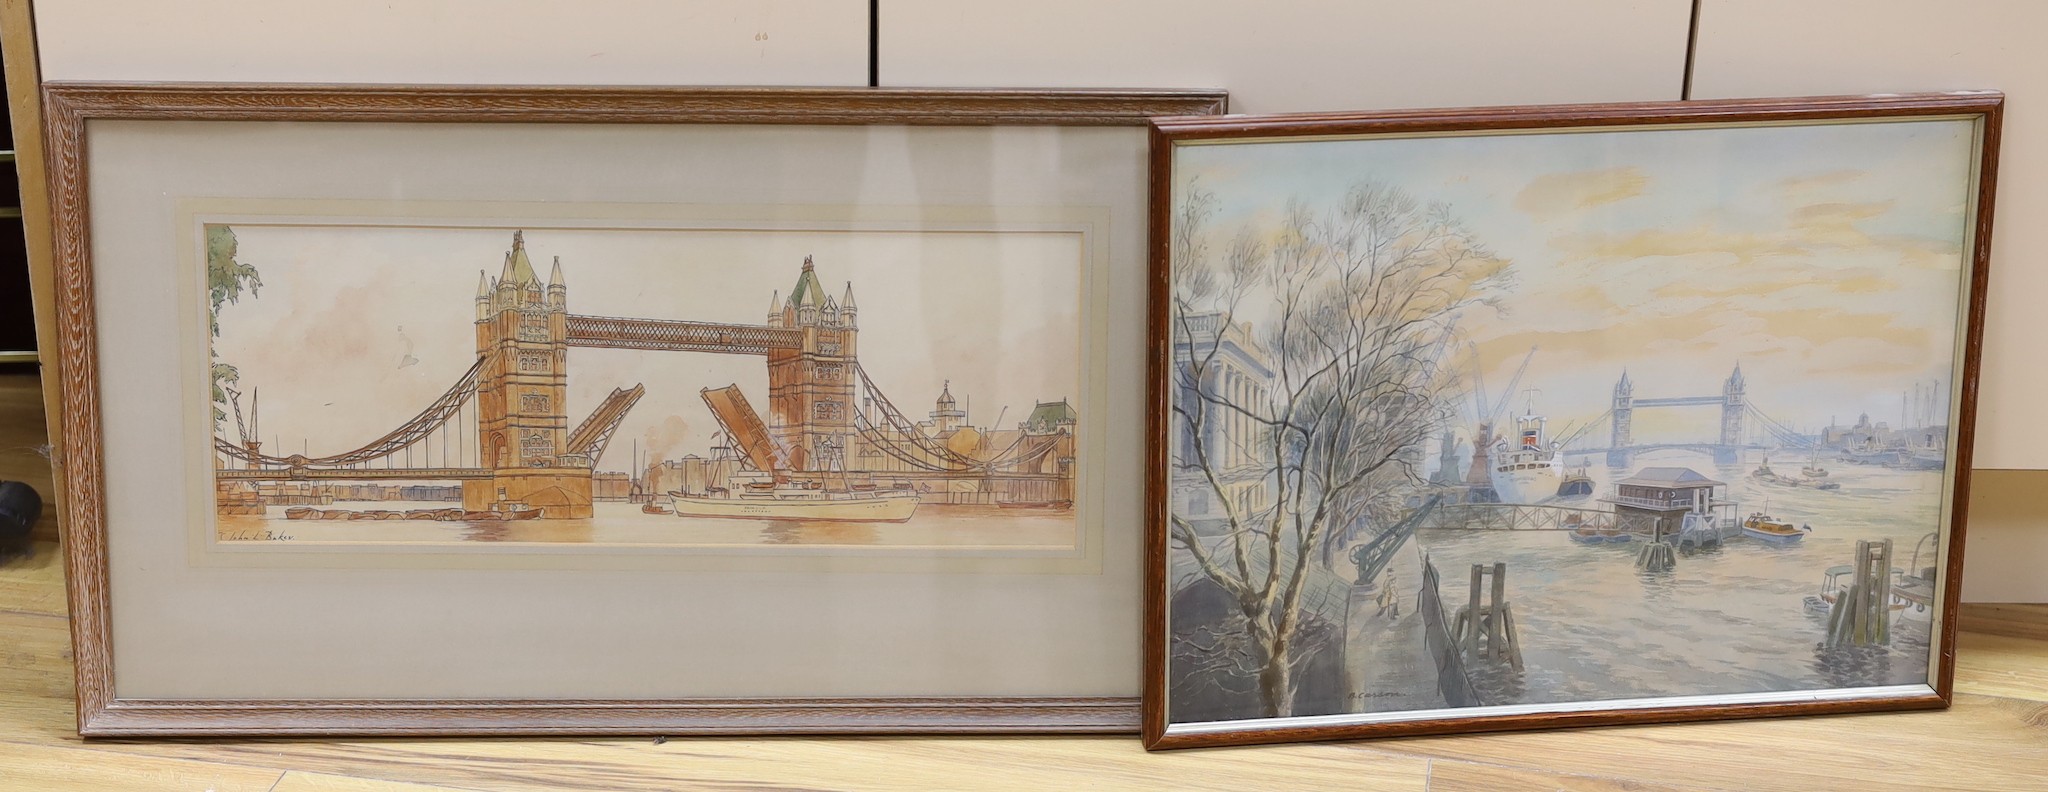 B Casson, 20th century, watercolour, Thames shipping, signed, 37 x 50cm, and John L Baker (b.1922), Tower Bridge, signed, 20 x 53cm (2)